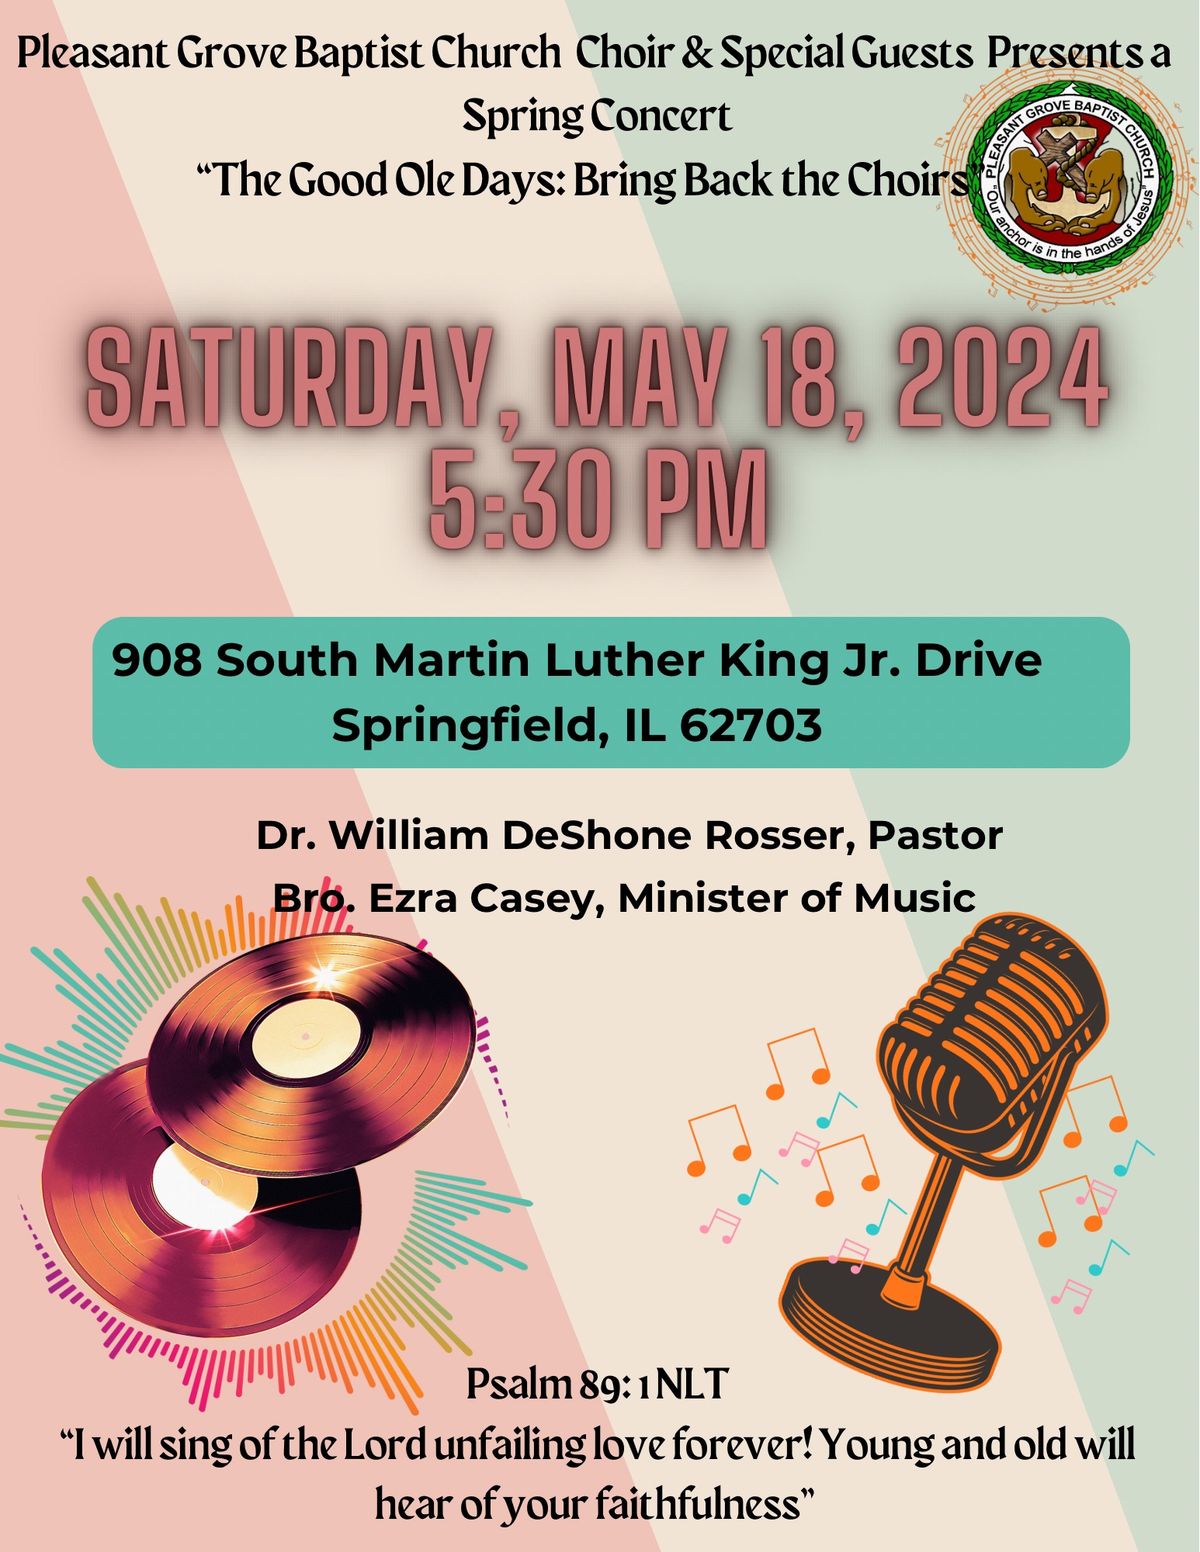 Pleasant Grove Baptist Church Choir & Special Guests Spring Concert